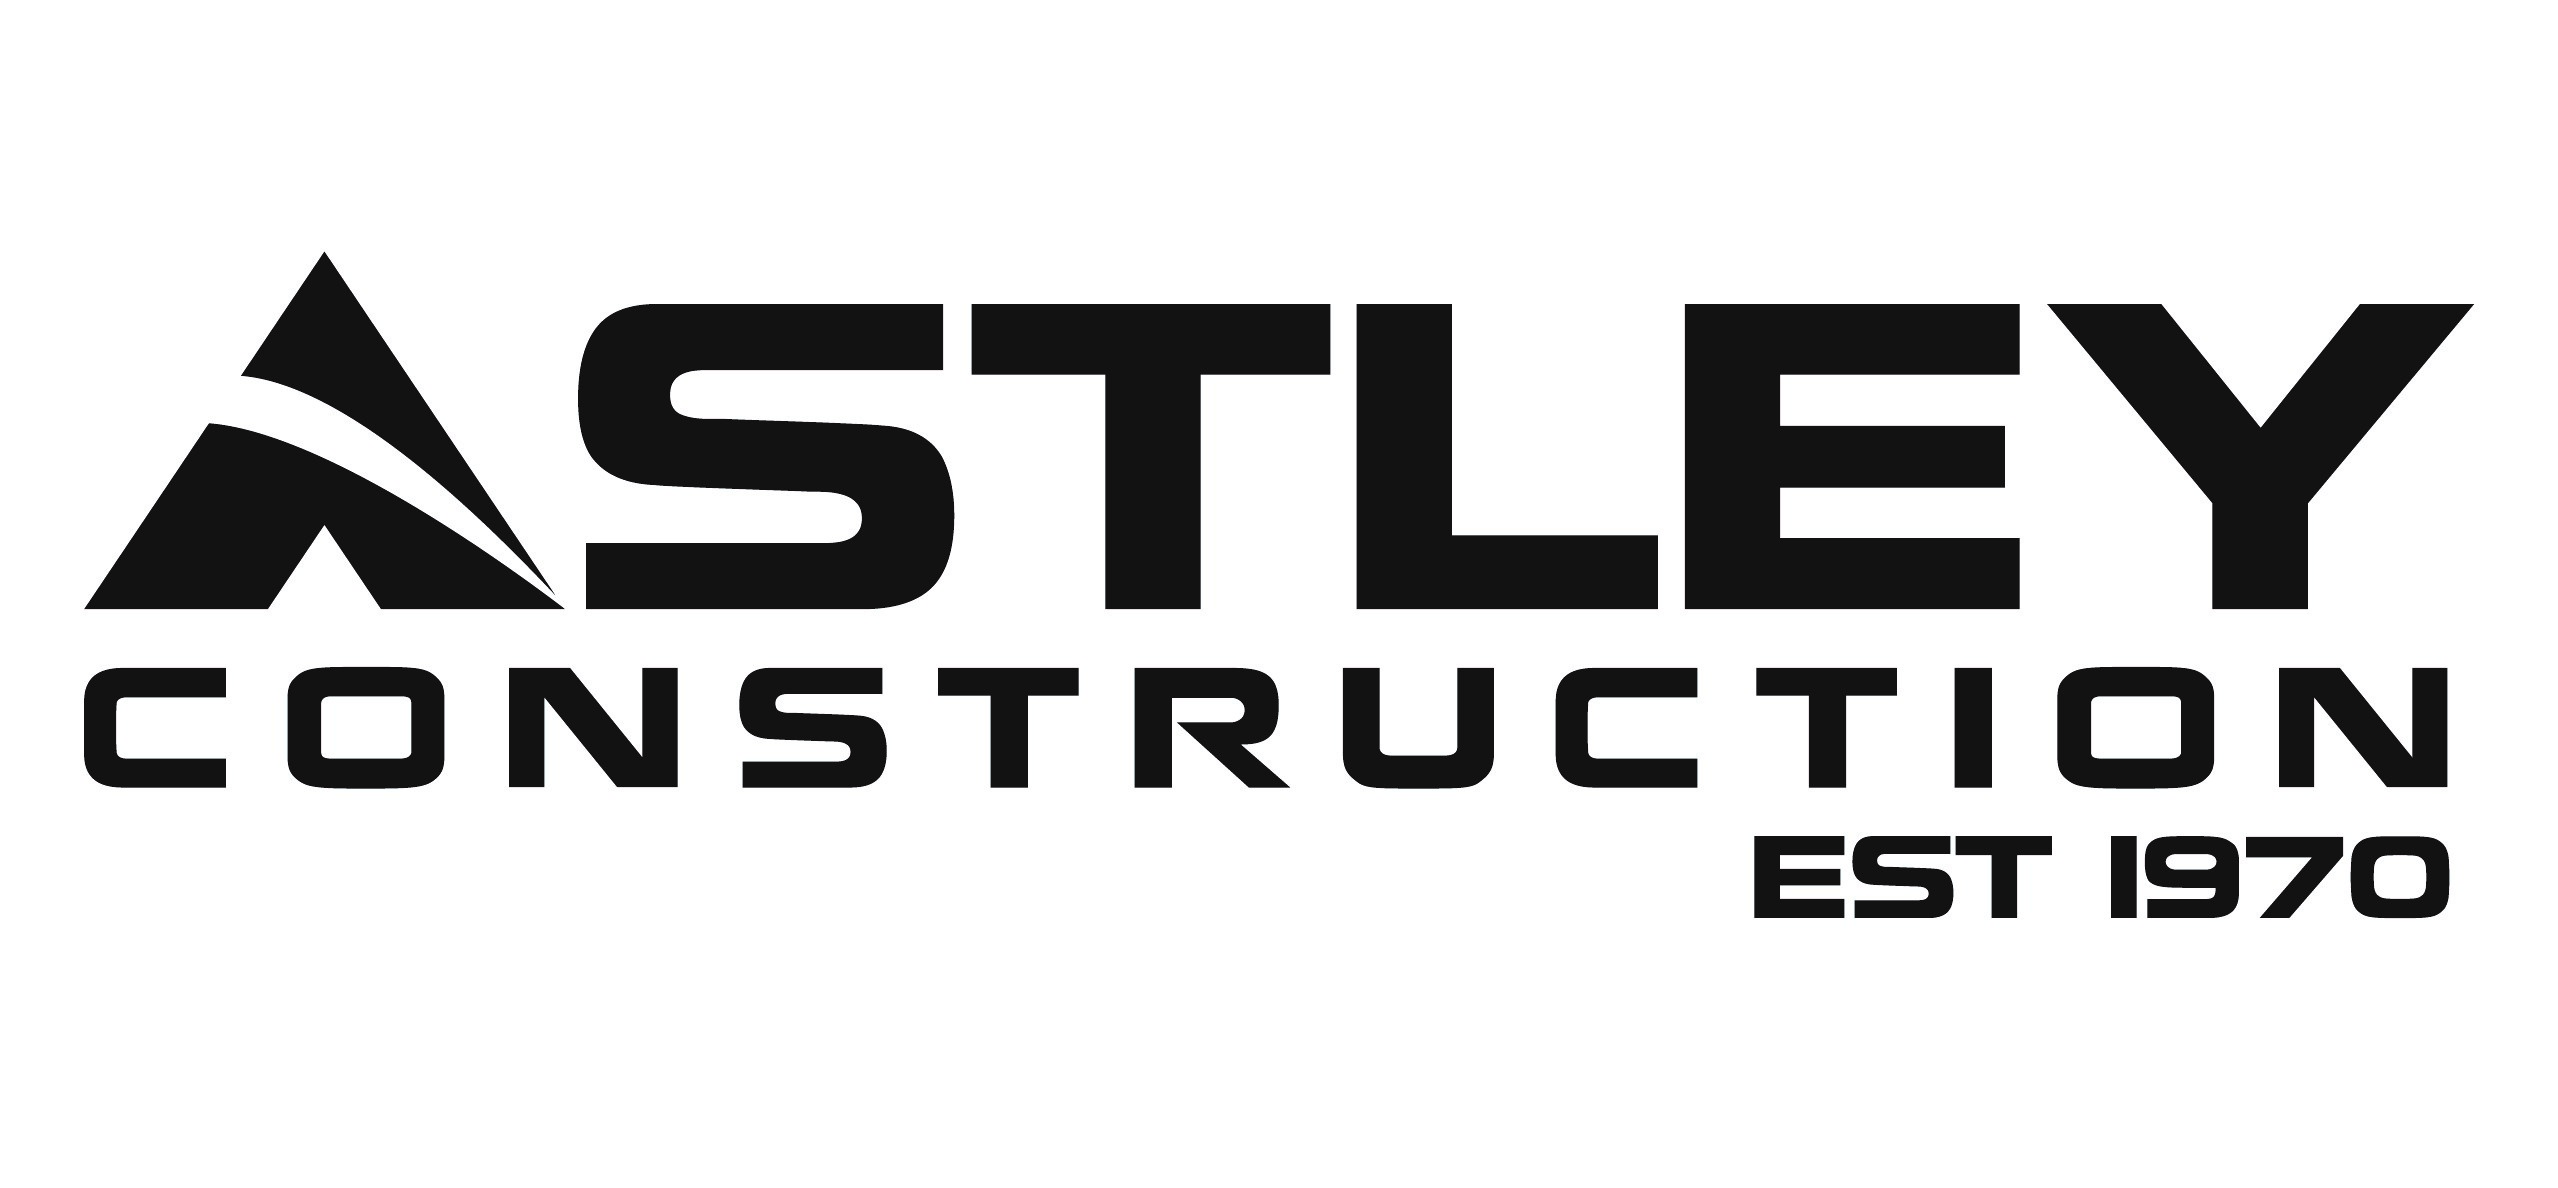 Astley Construction